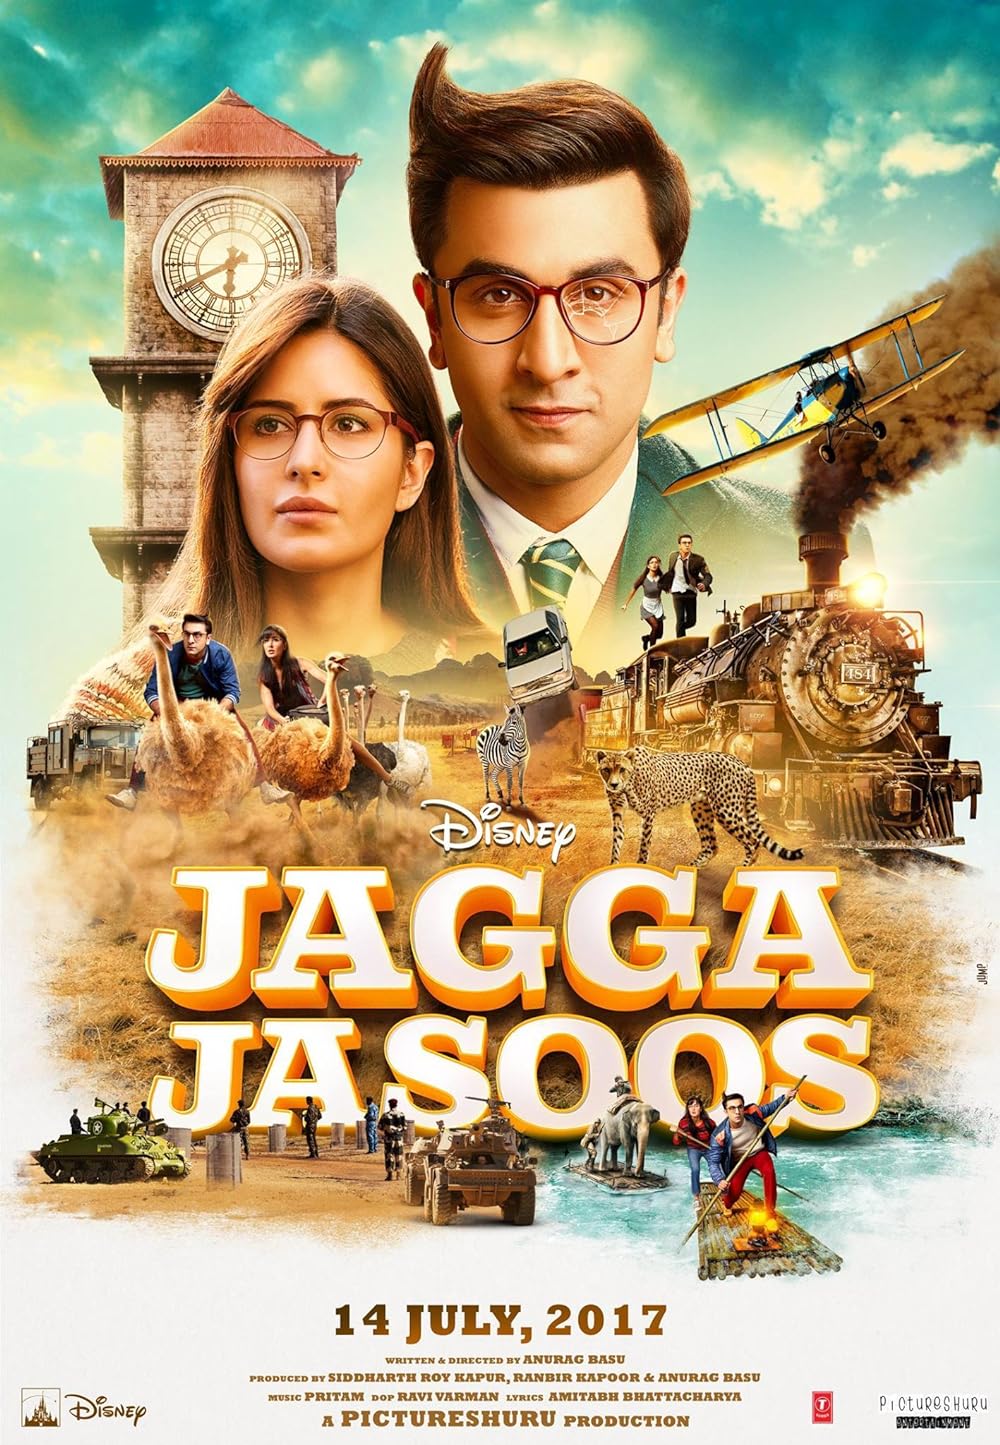 Download Jagga Jasoos (2017) Hindi Movie Web-DL Print 480p [500MB] || 720p [1.2GB]